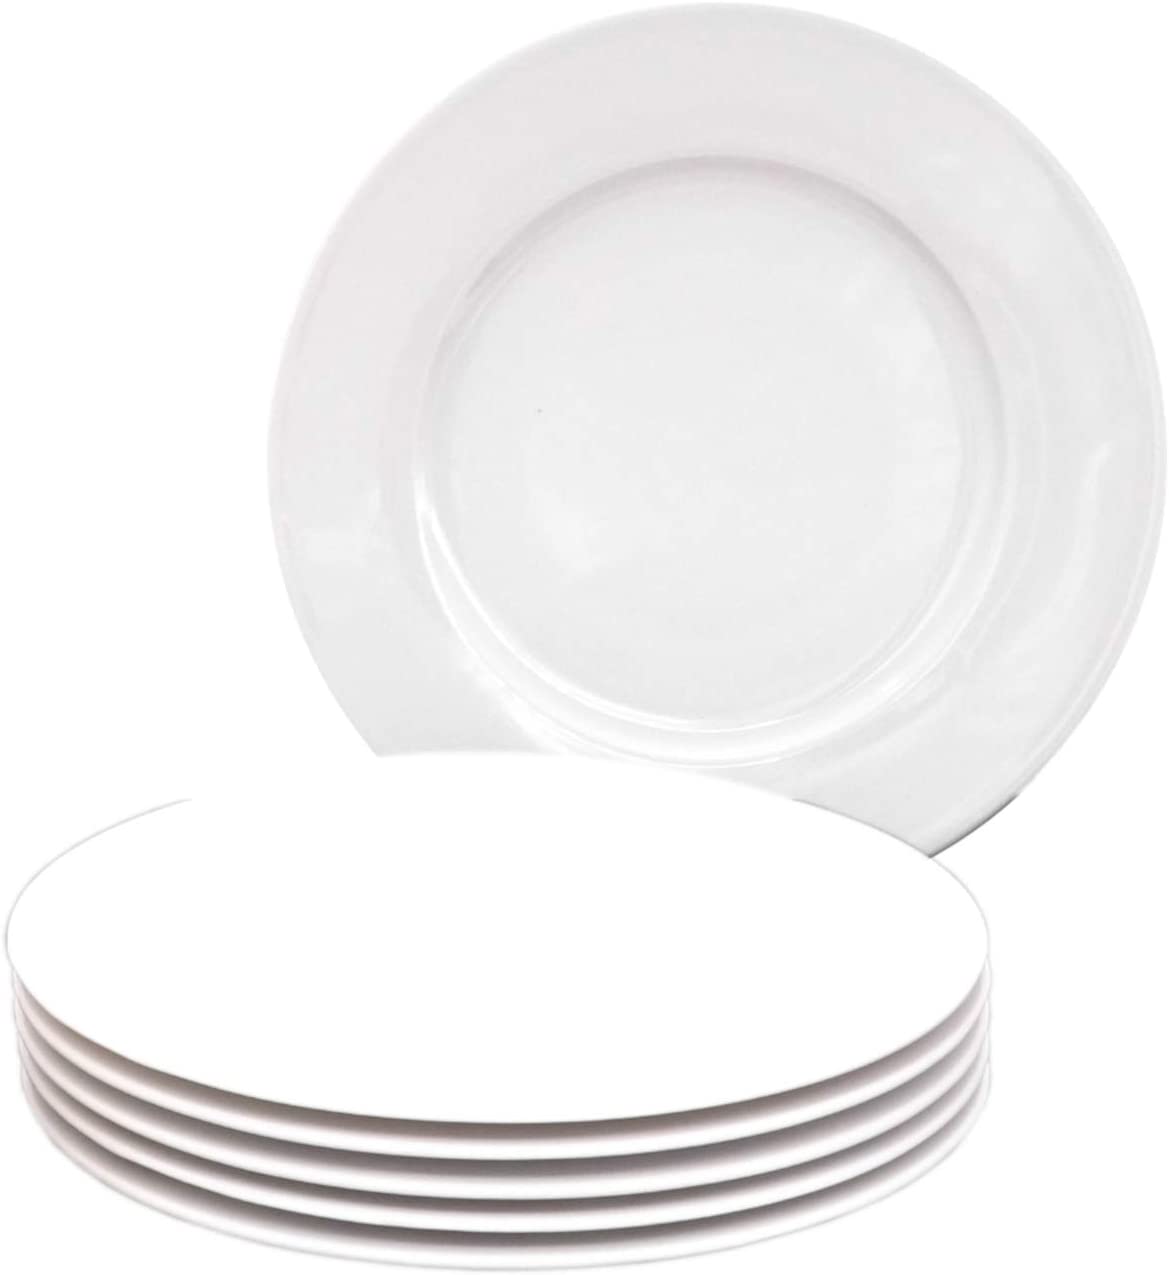 KAHLA 39 °F190 A90039 °C Aronda Porcelain Cake Plate Set of 6 Dessert Plates 21 cm Round White No Decoration Small Snack Plate